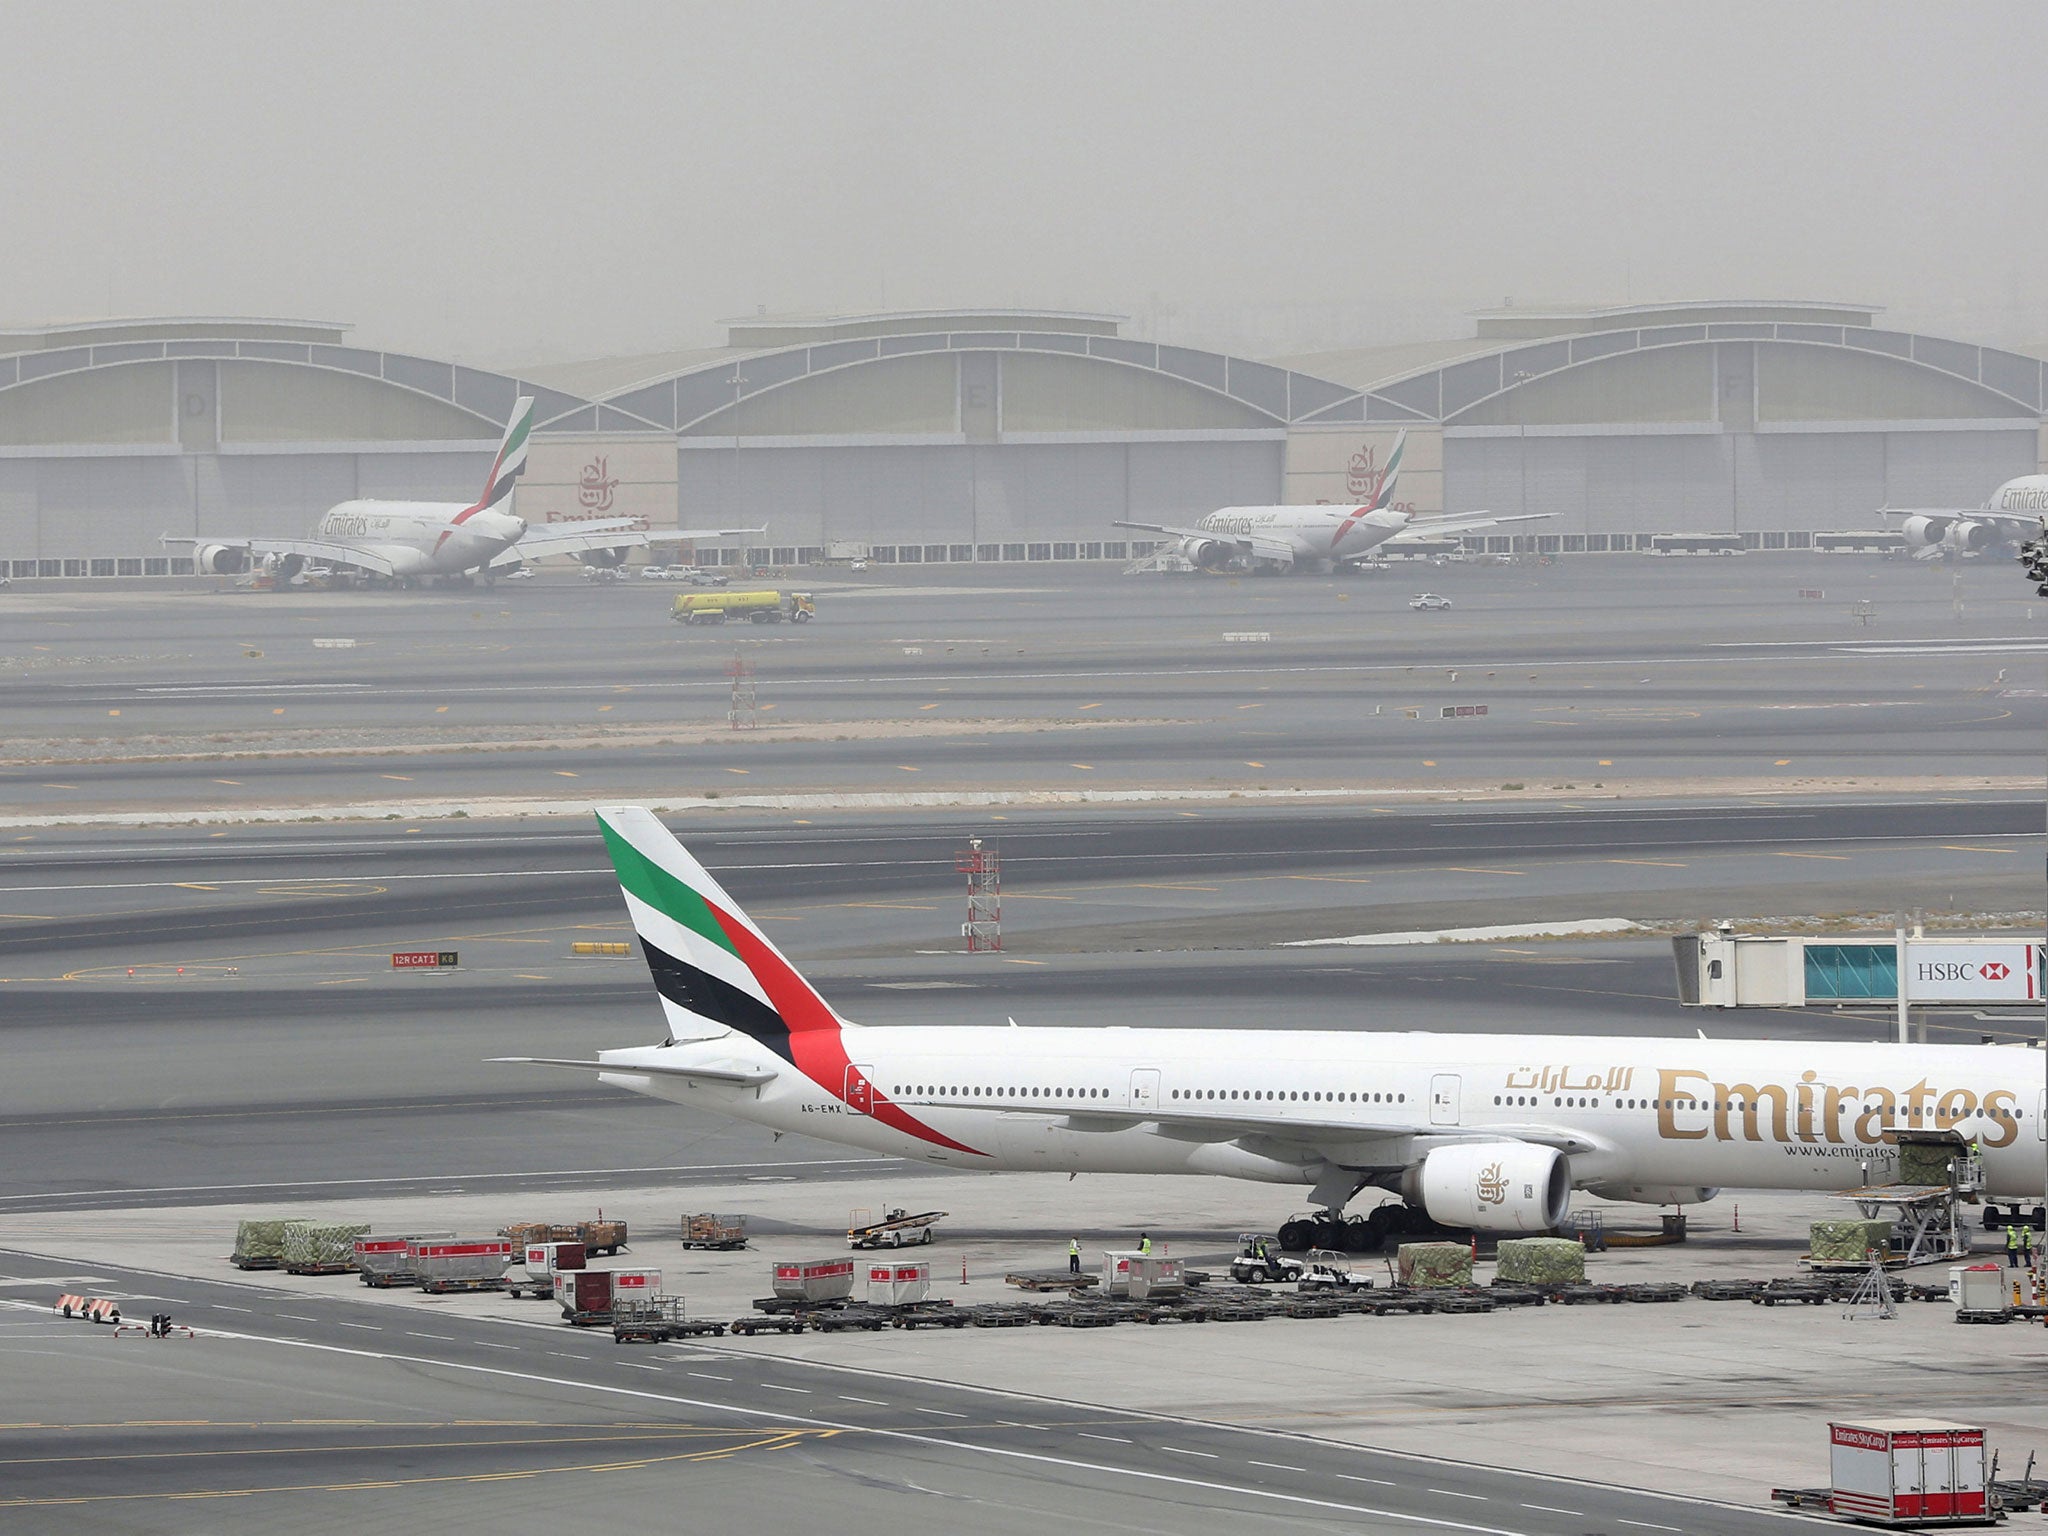 Dubai airport, where an Emirates plane crash-landed last week